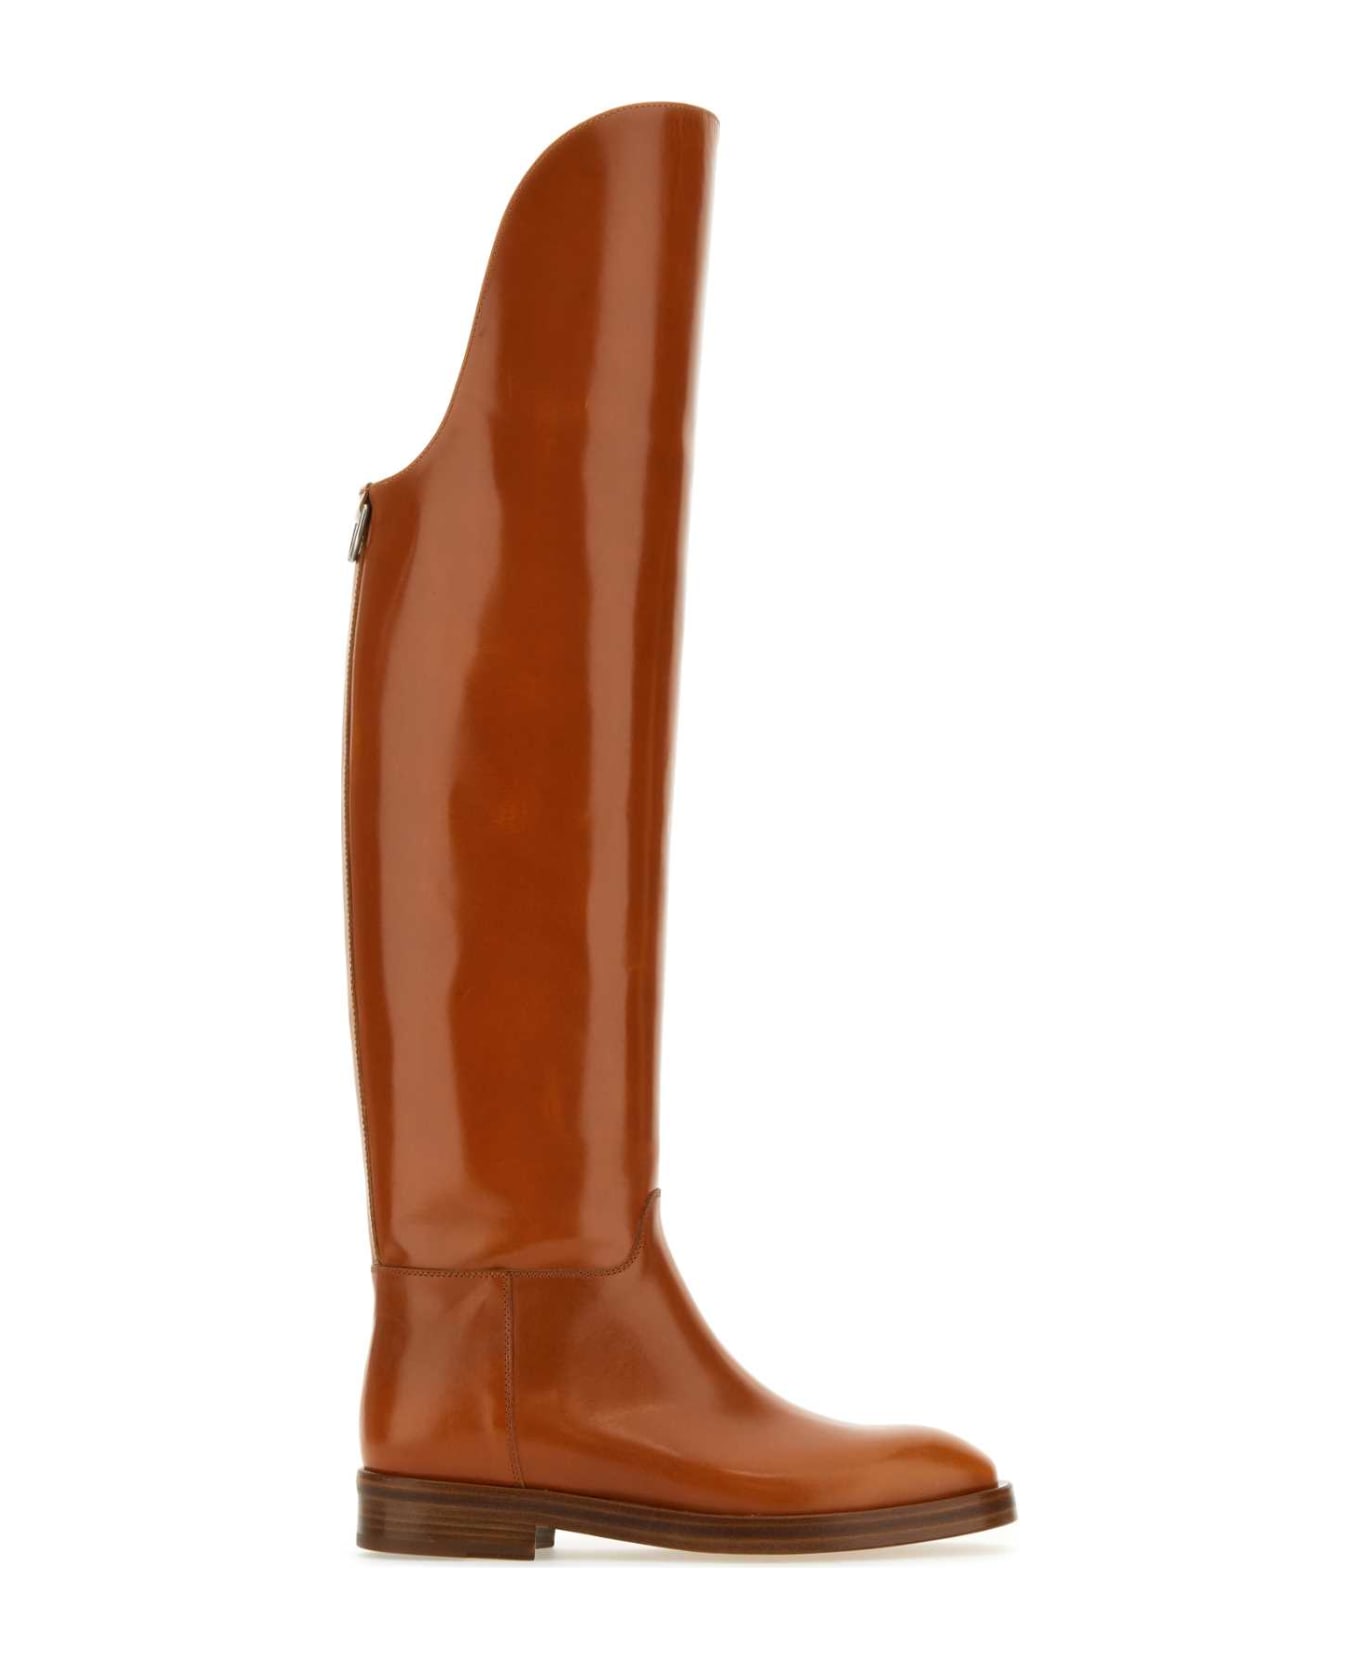 Durazzi Milano Caramel Leather Equestran Boots - Brown